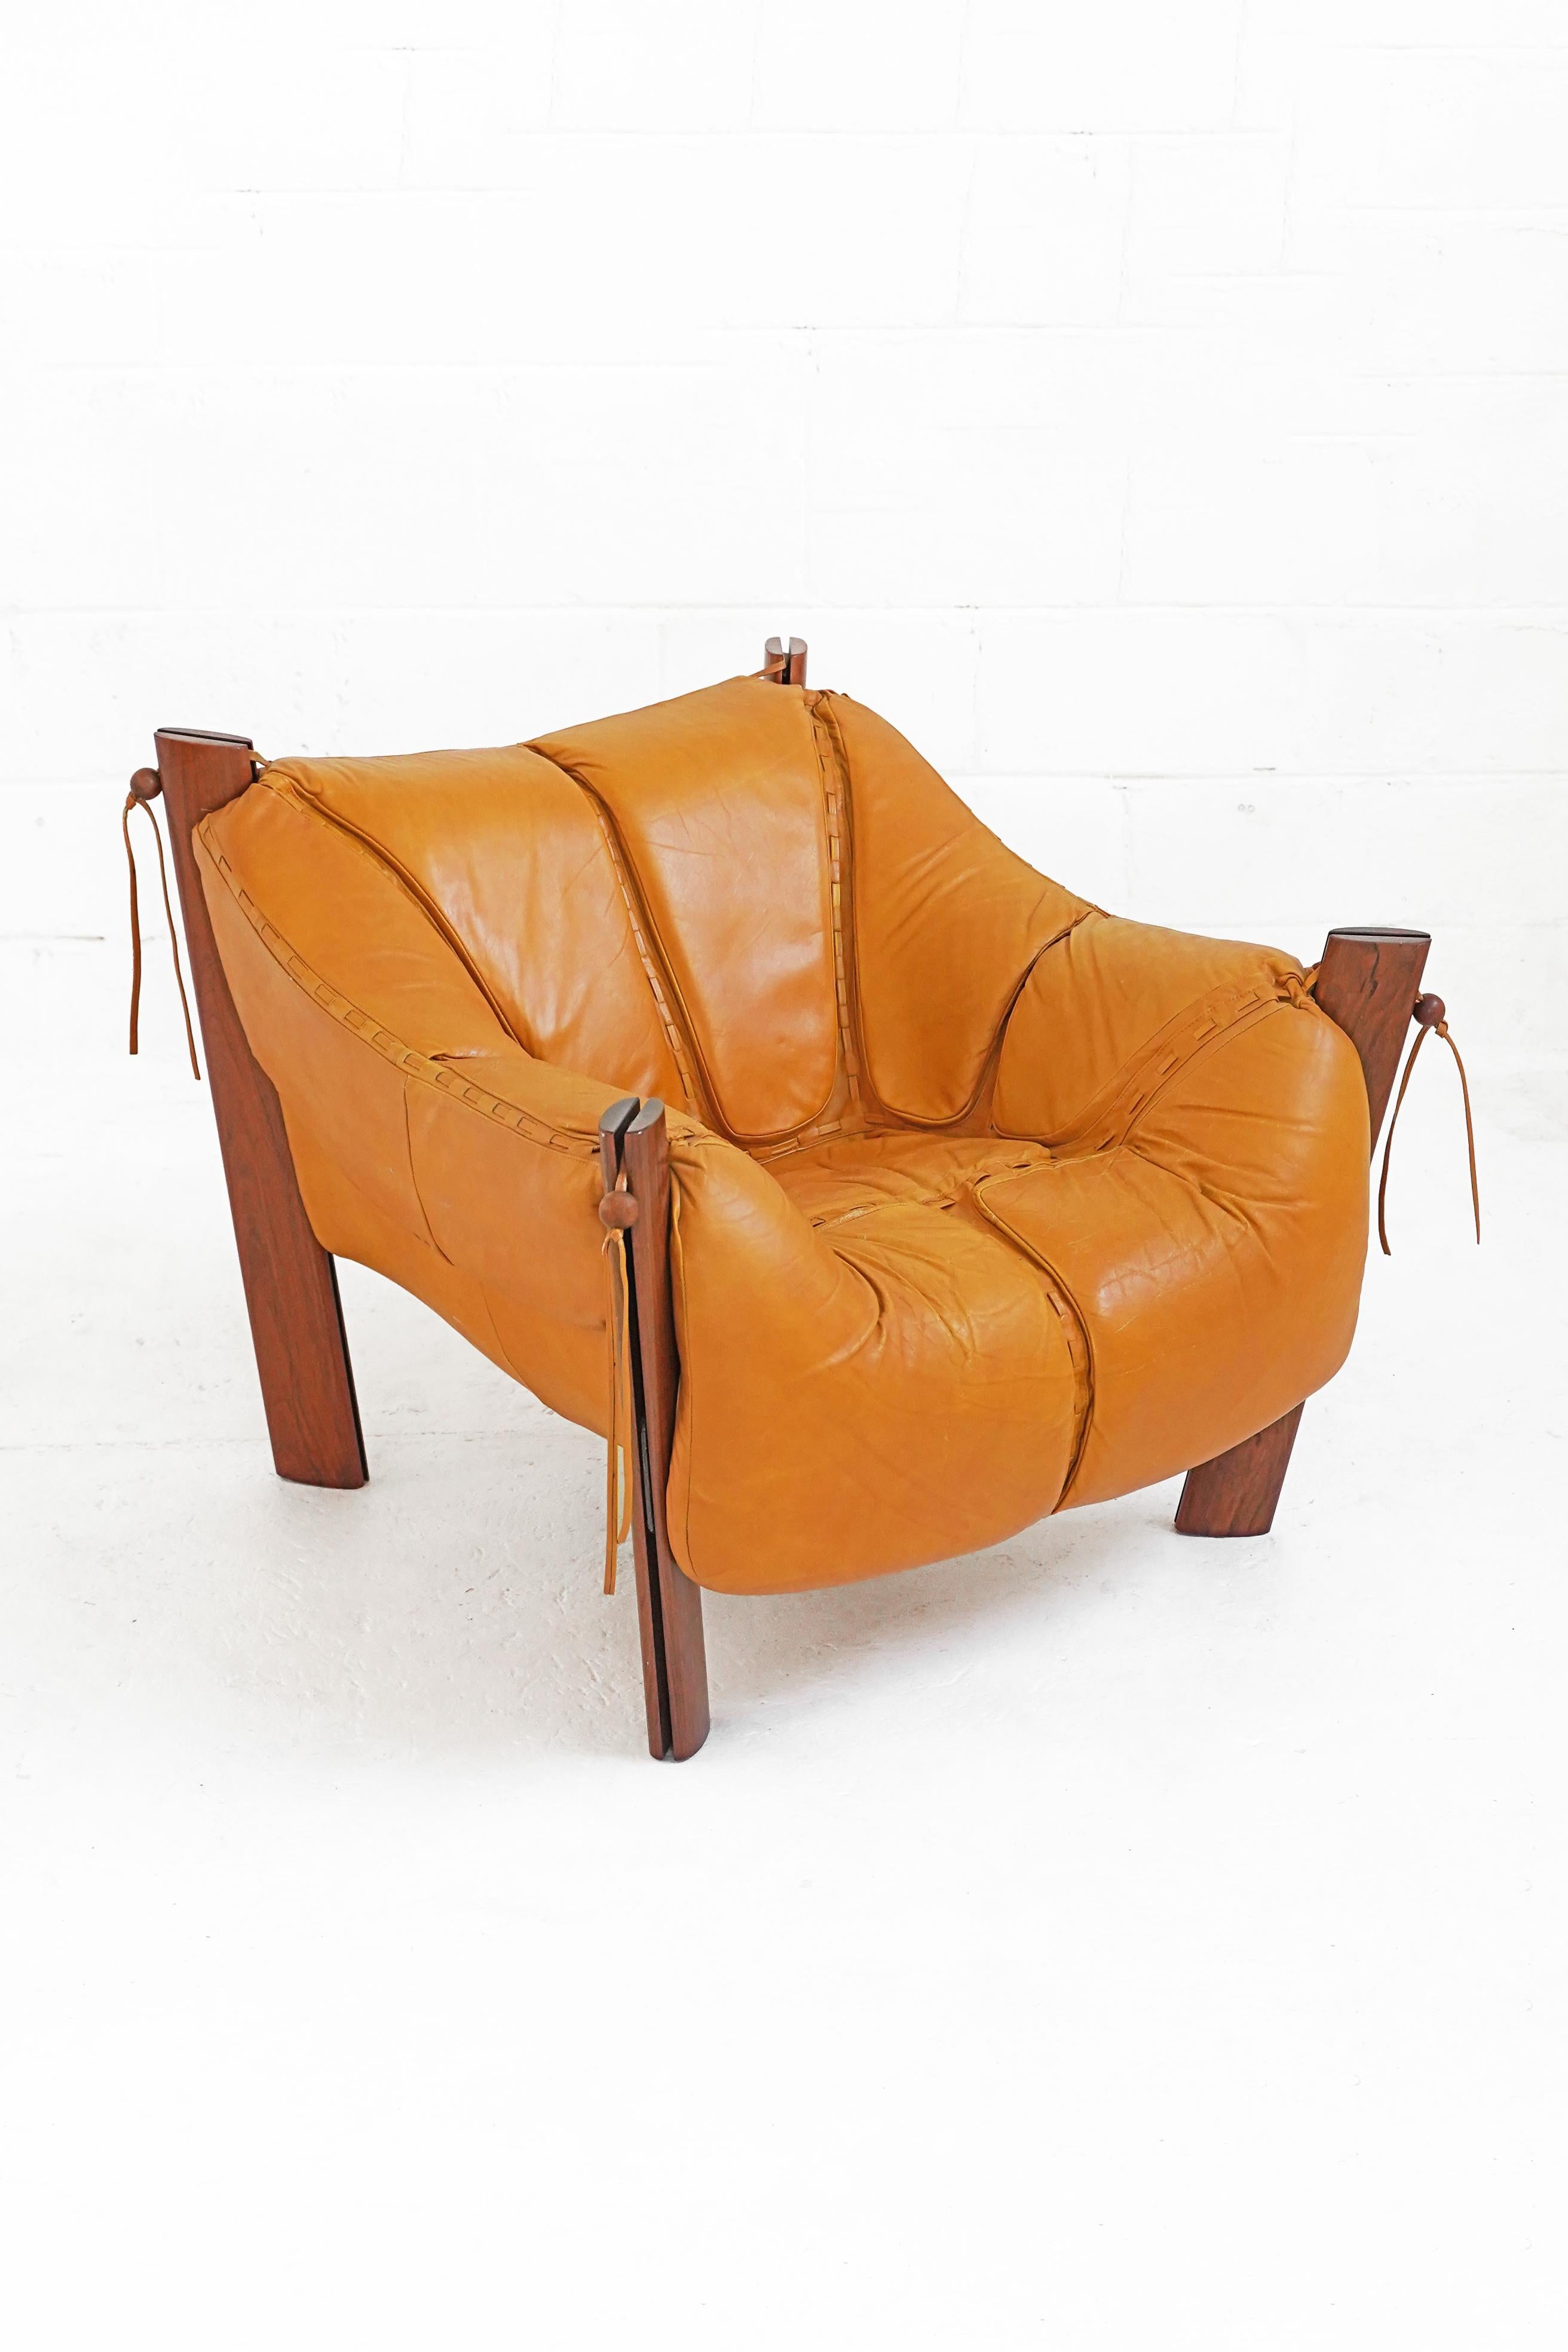 MP-211 Lounge Chair by Brazilian Designer Percival Lafer for Móveis Lafer 2